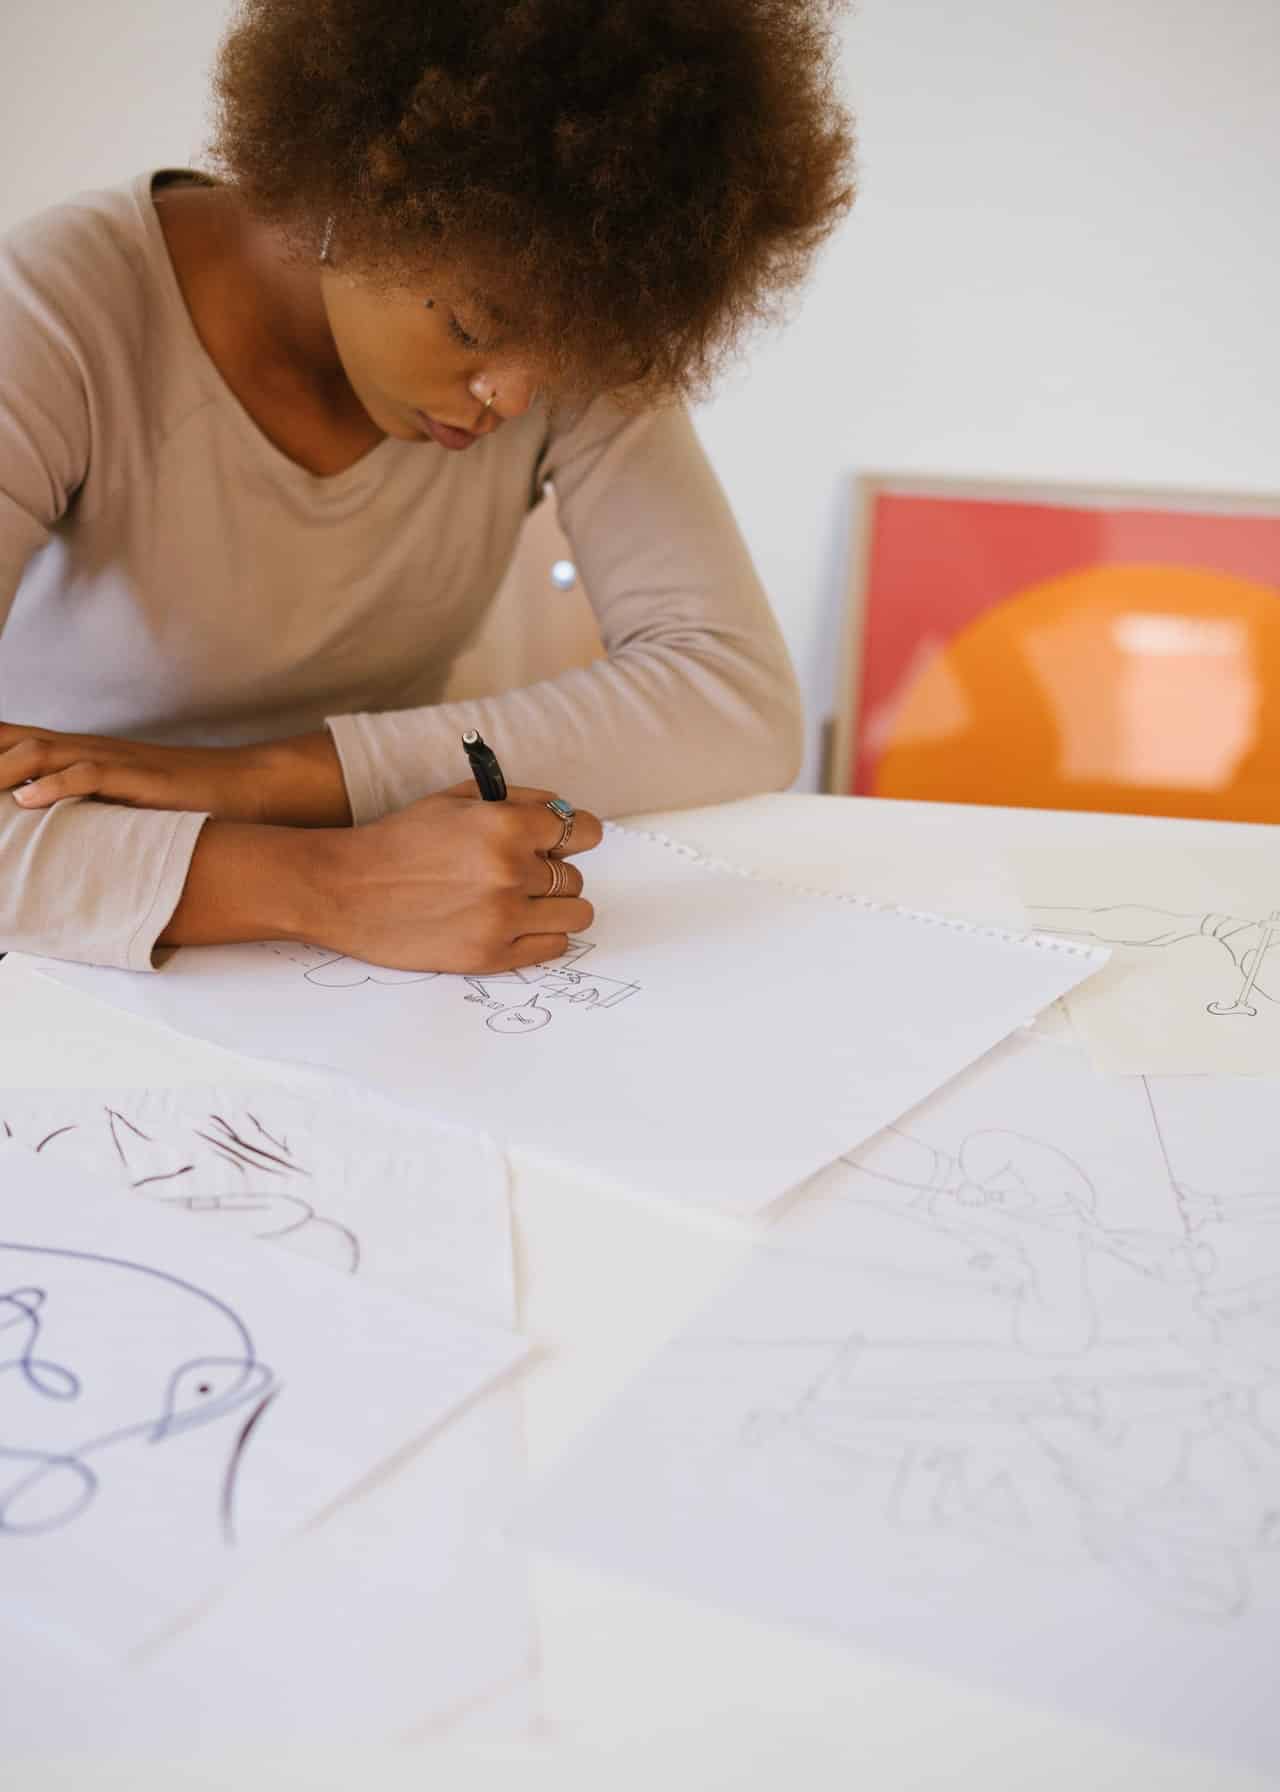 How to Draw in Illustrator | Envato Tuts+